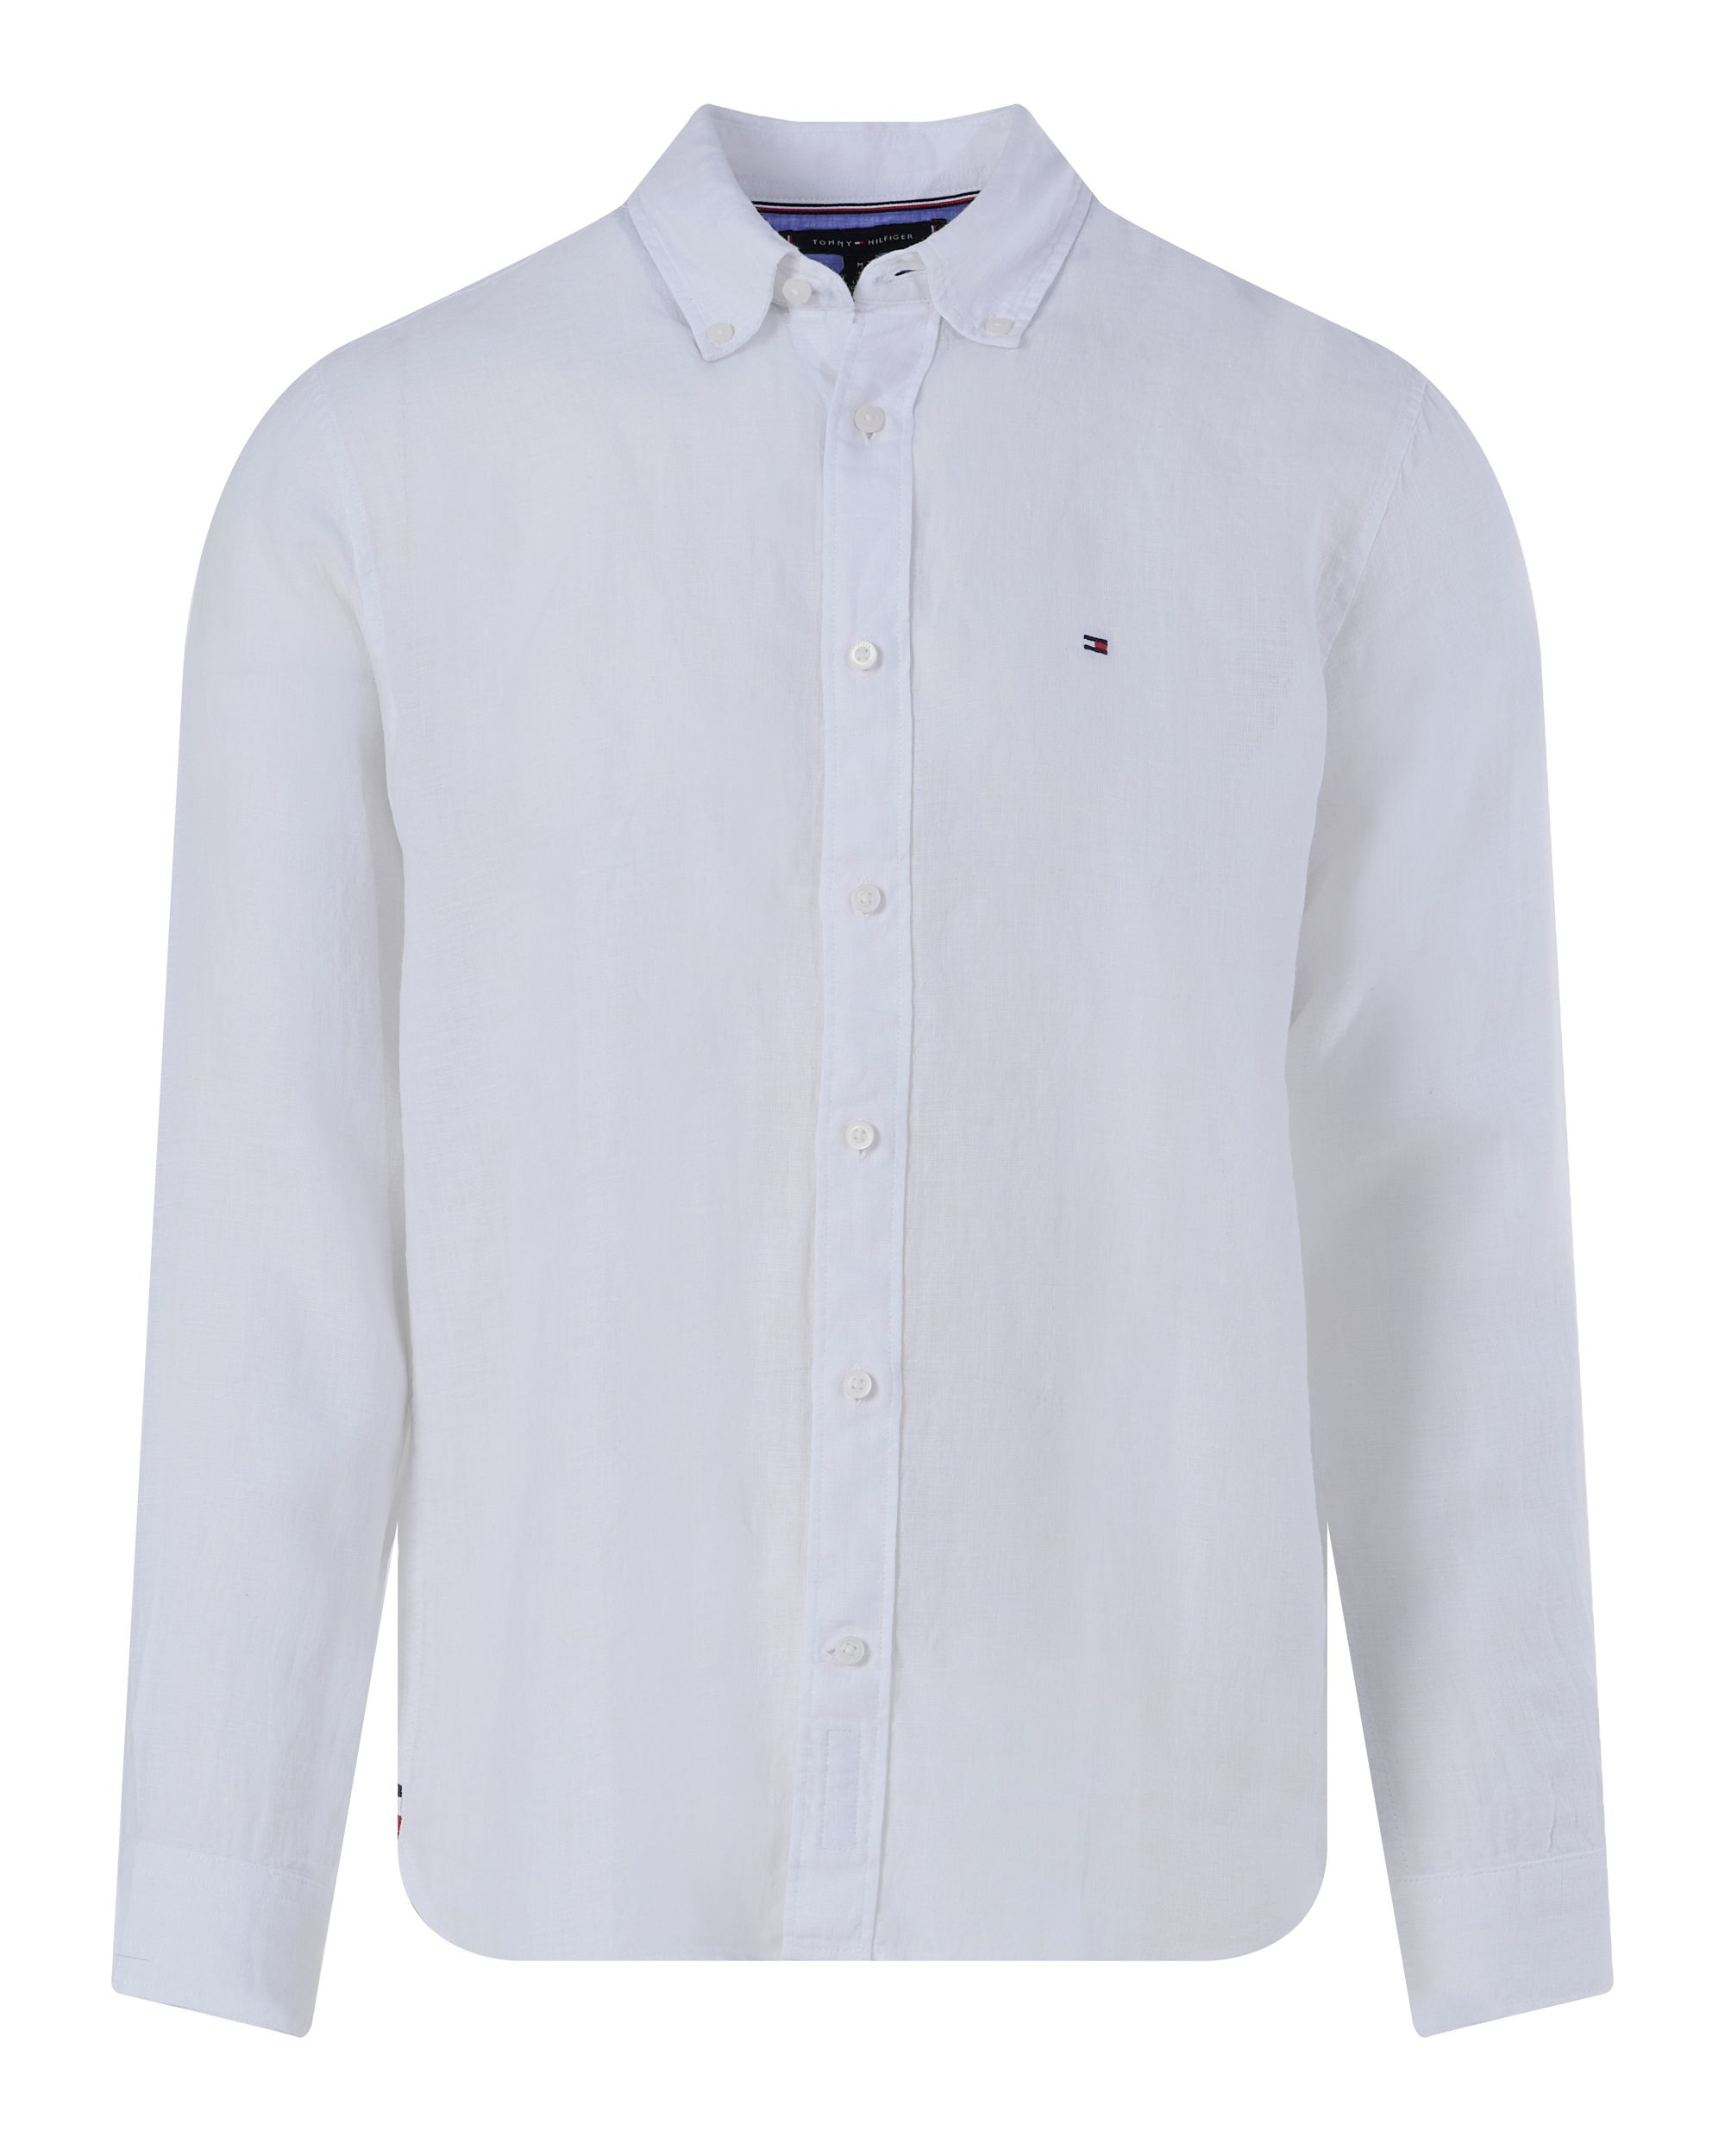 Tommy Hilfiger Menswear Casual Overhemd LM Wit 094640-001-L